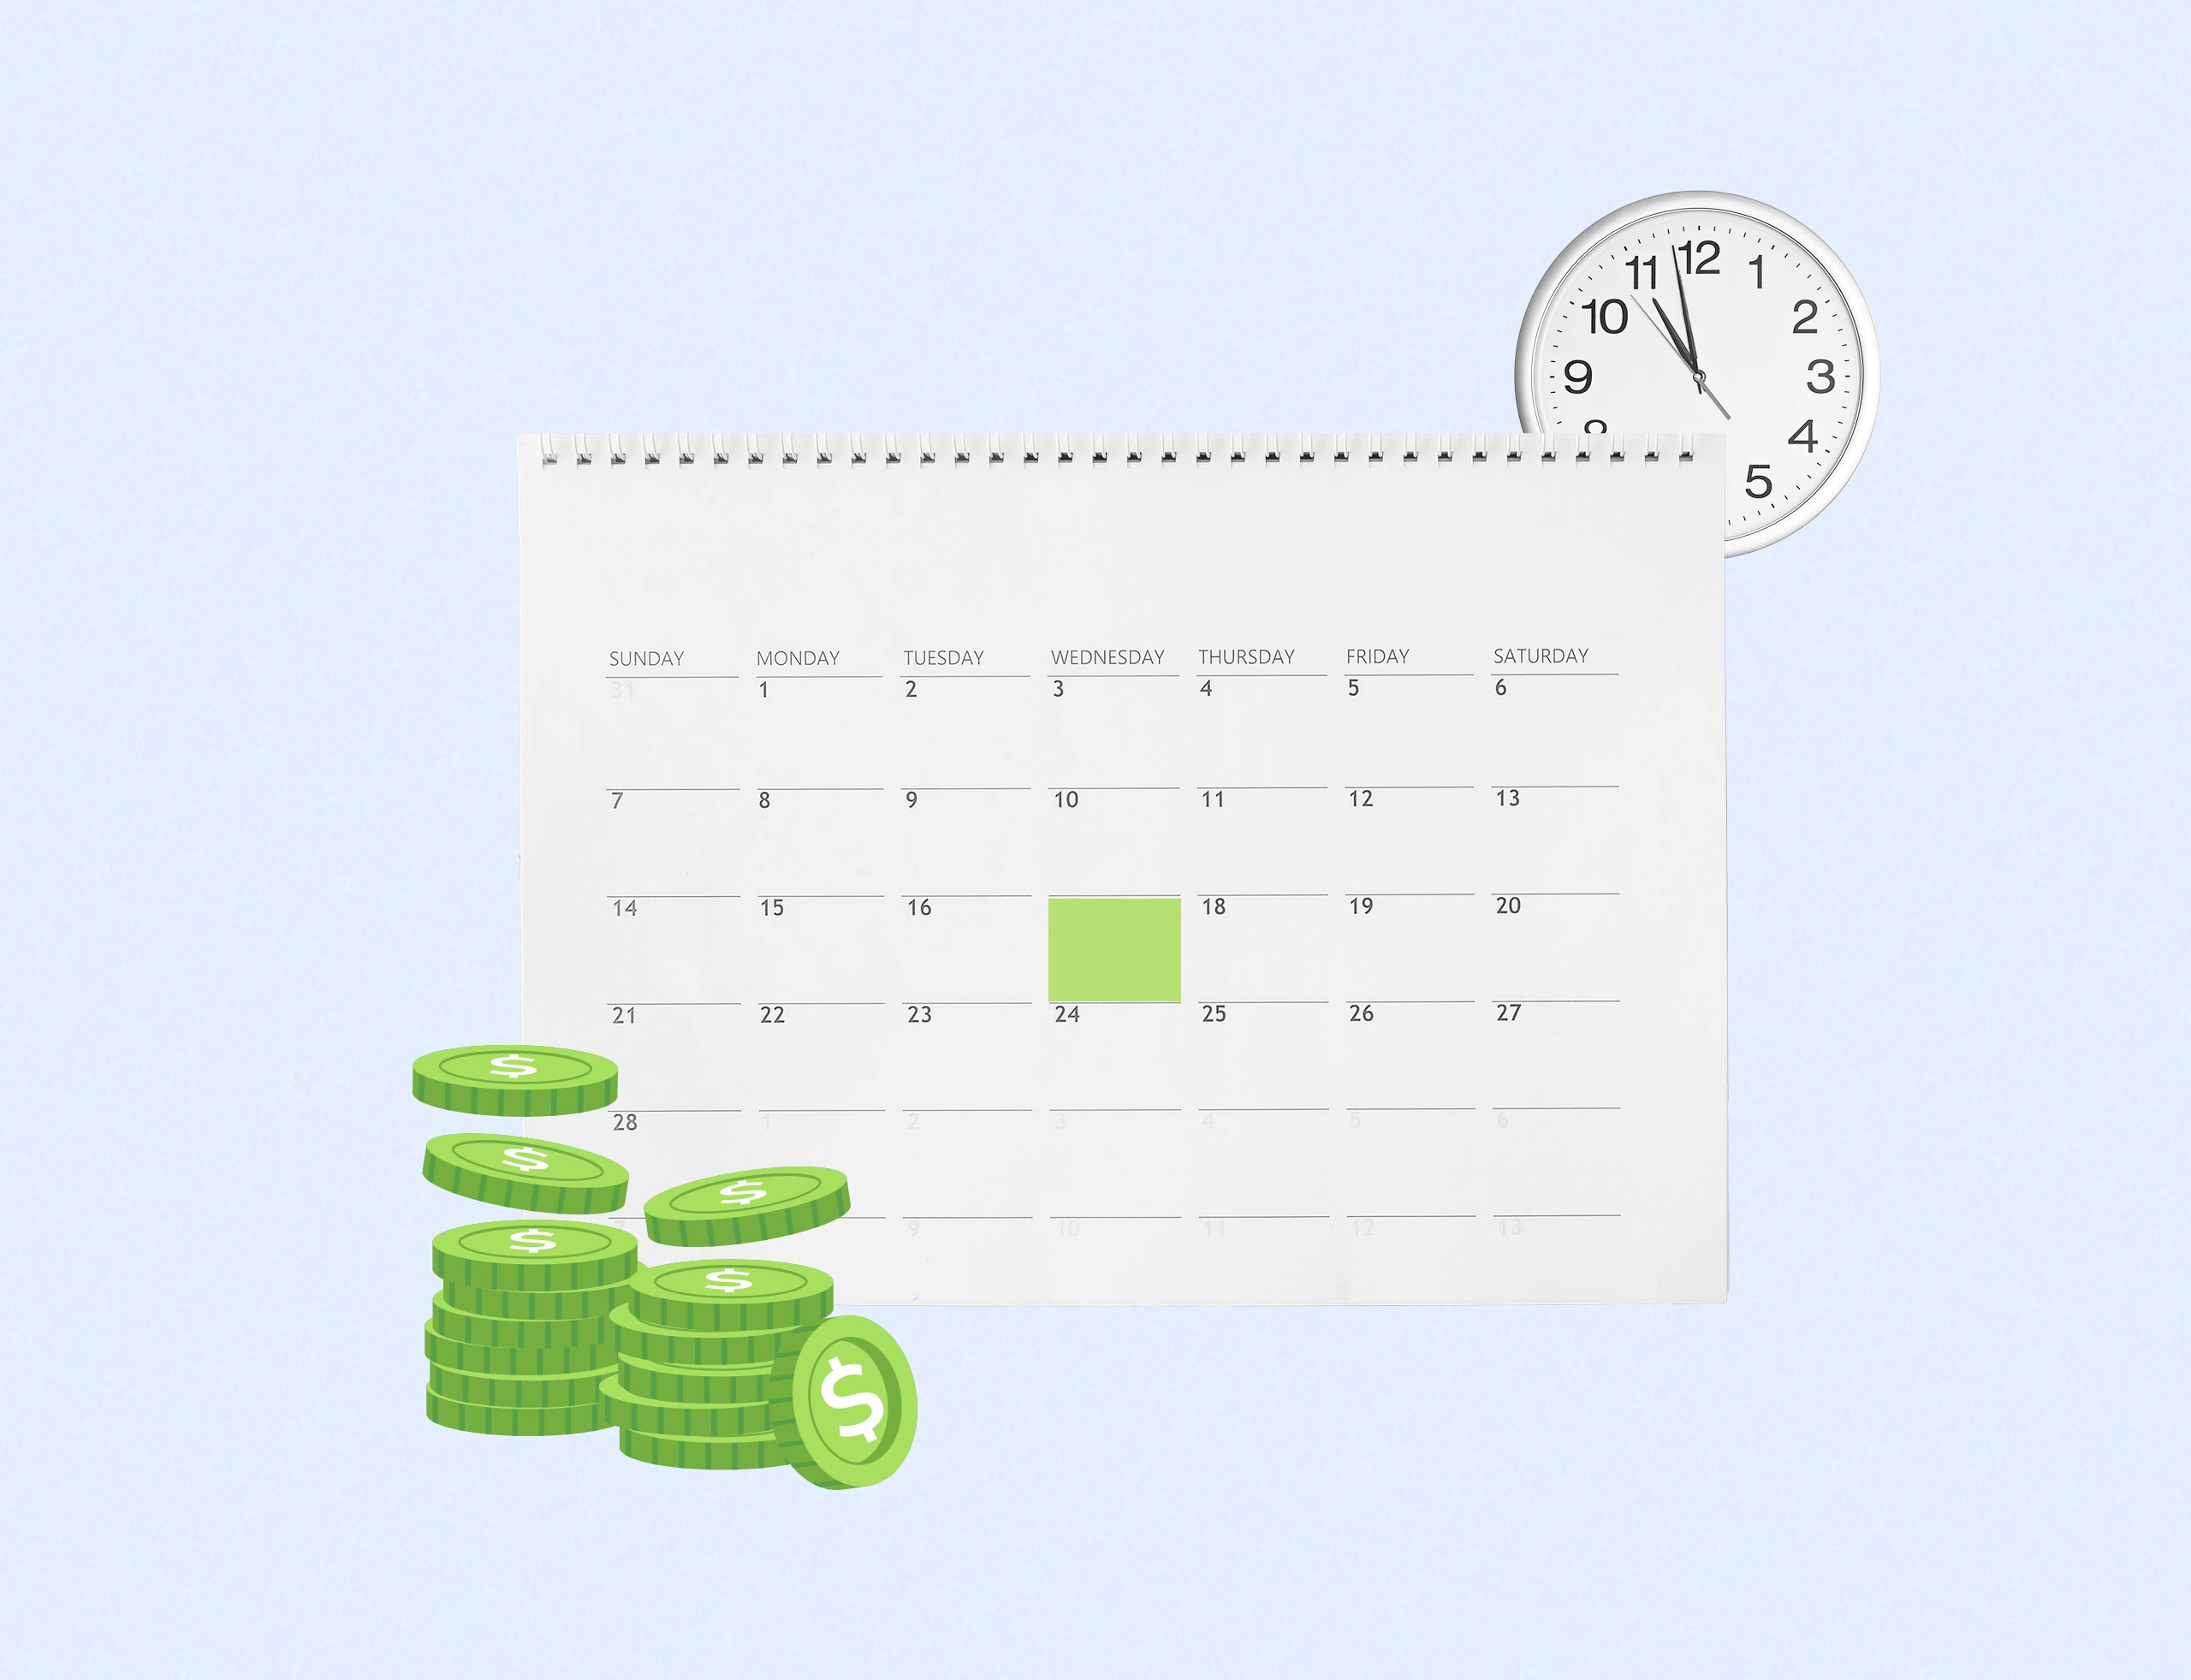 Calendario con fecha marcada en verde con reloj atrás y monedas verdes enfrente.